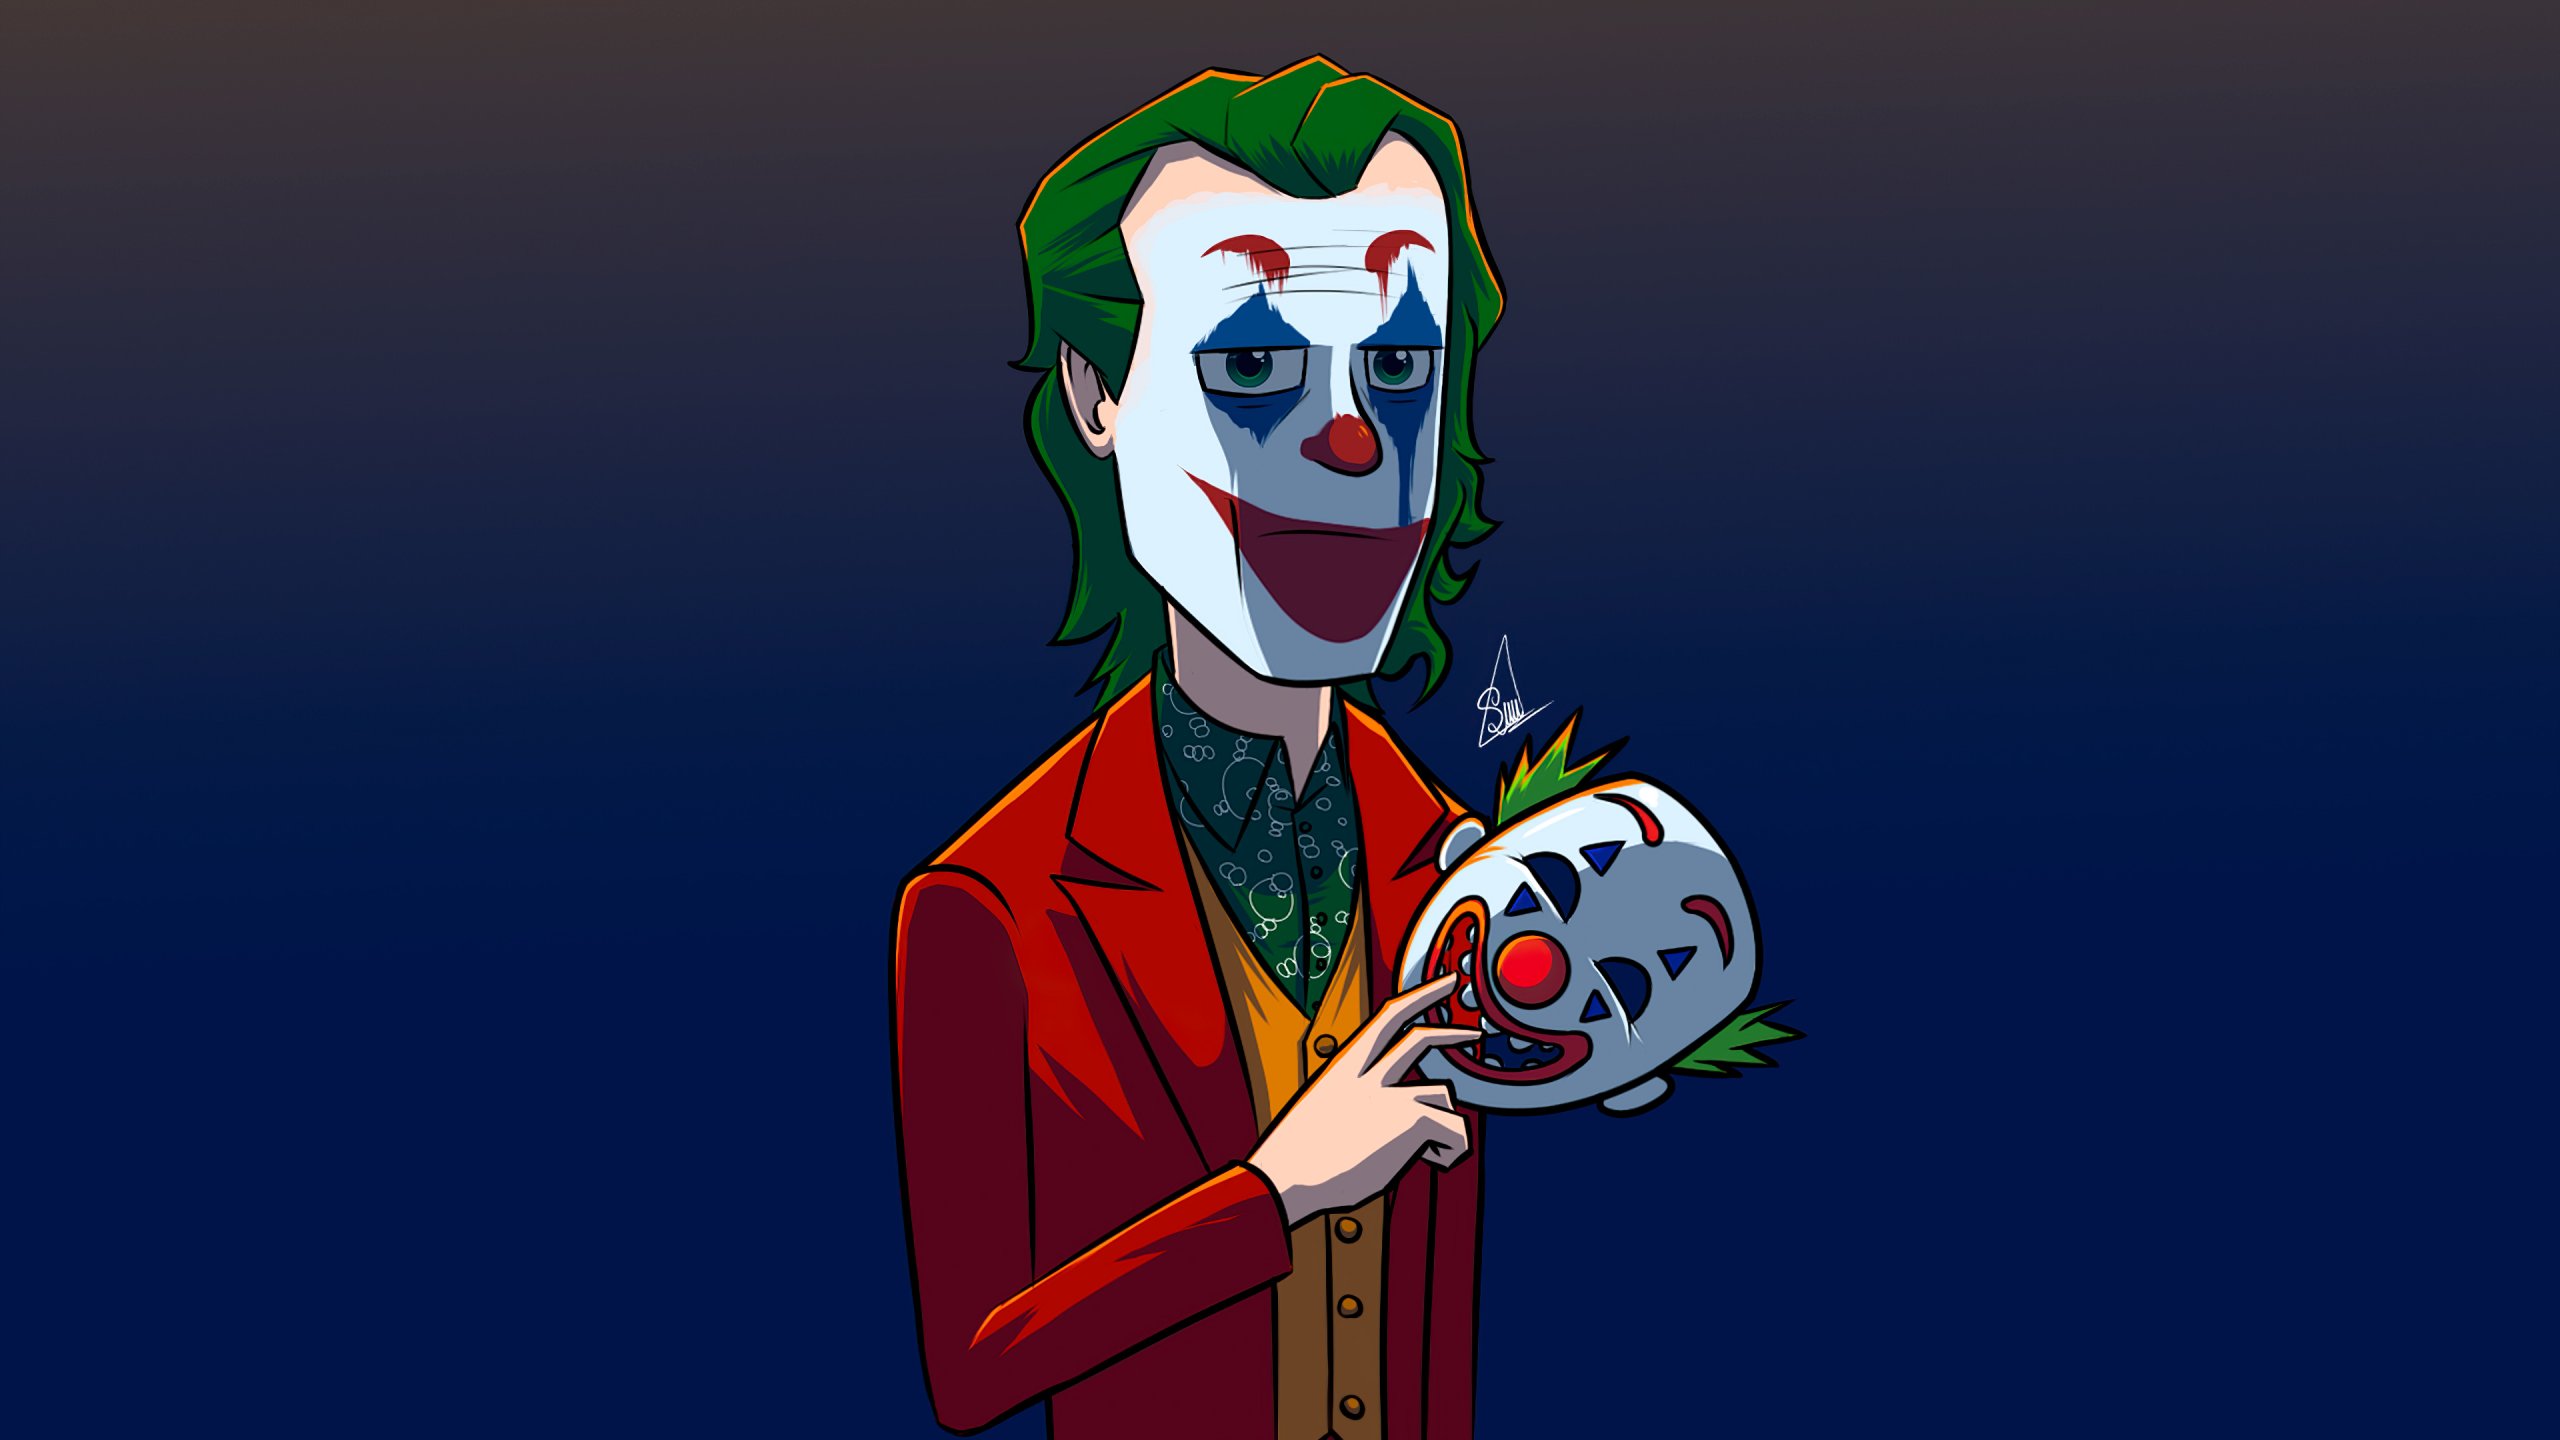 The Joker with clown mask Wallpaper 4k Ultra HD ID:7392